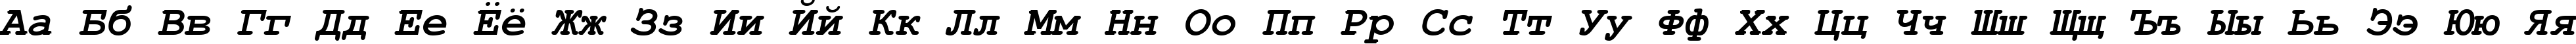 Пример написания русского алфавита шрифтом Courier New Cyr Bold Italic